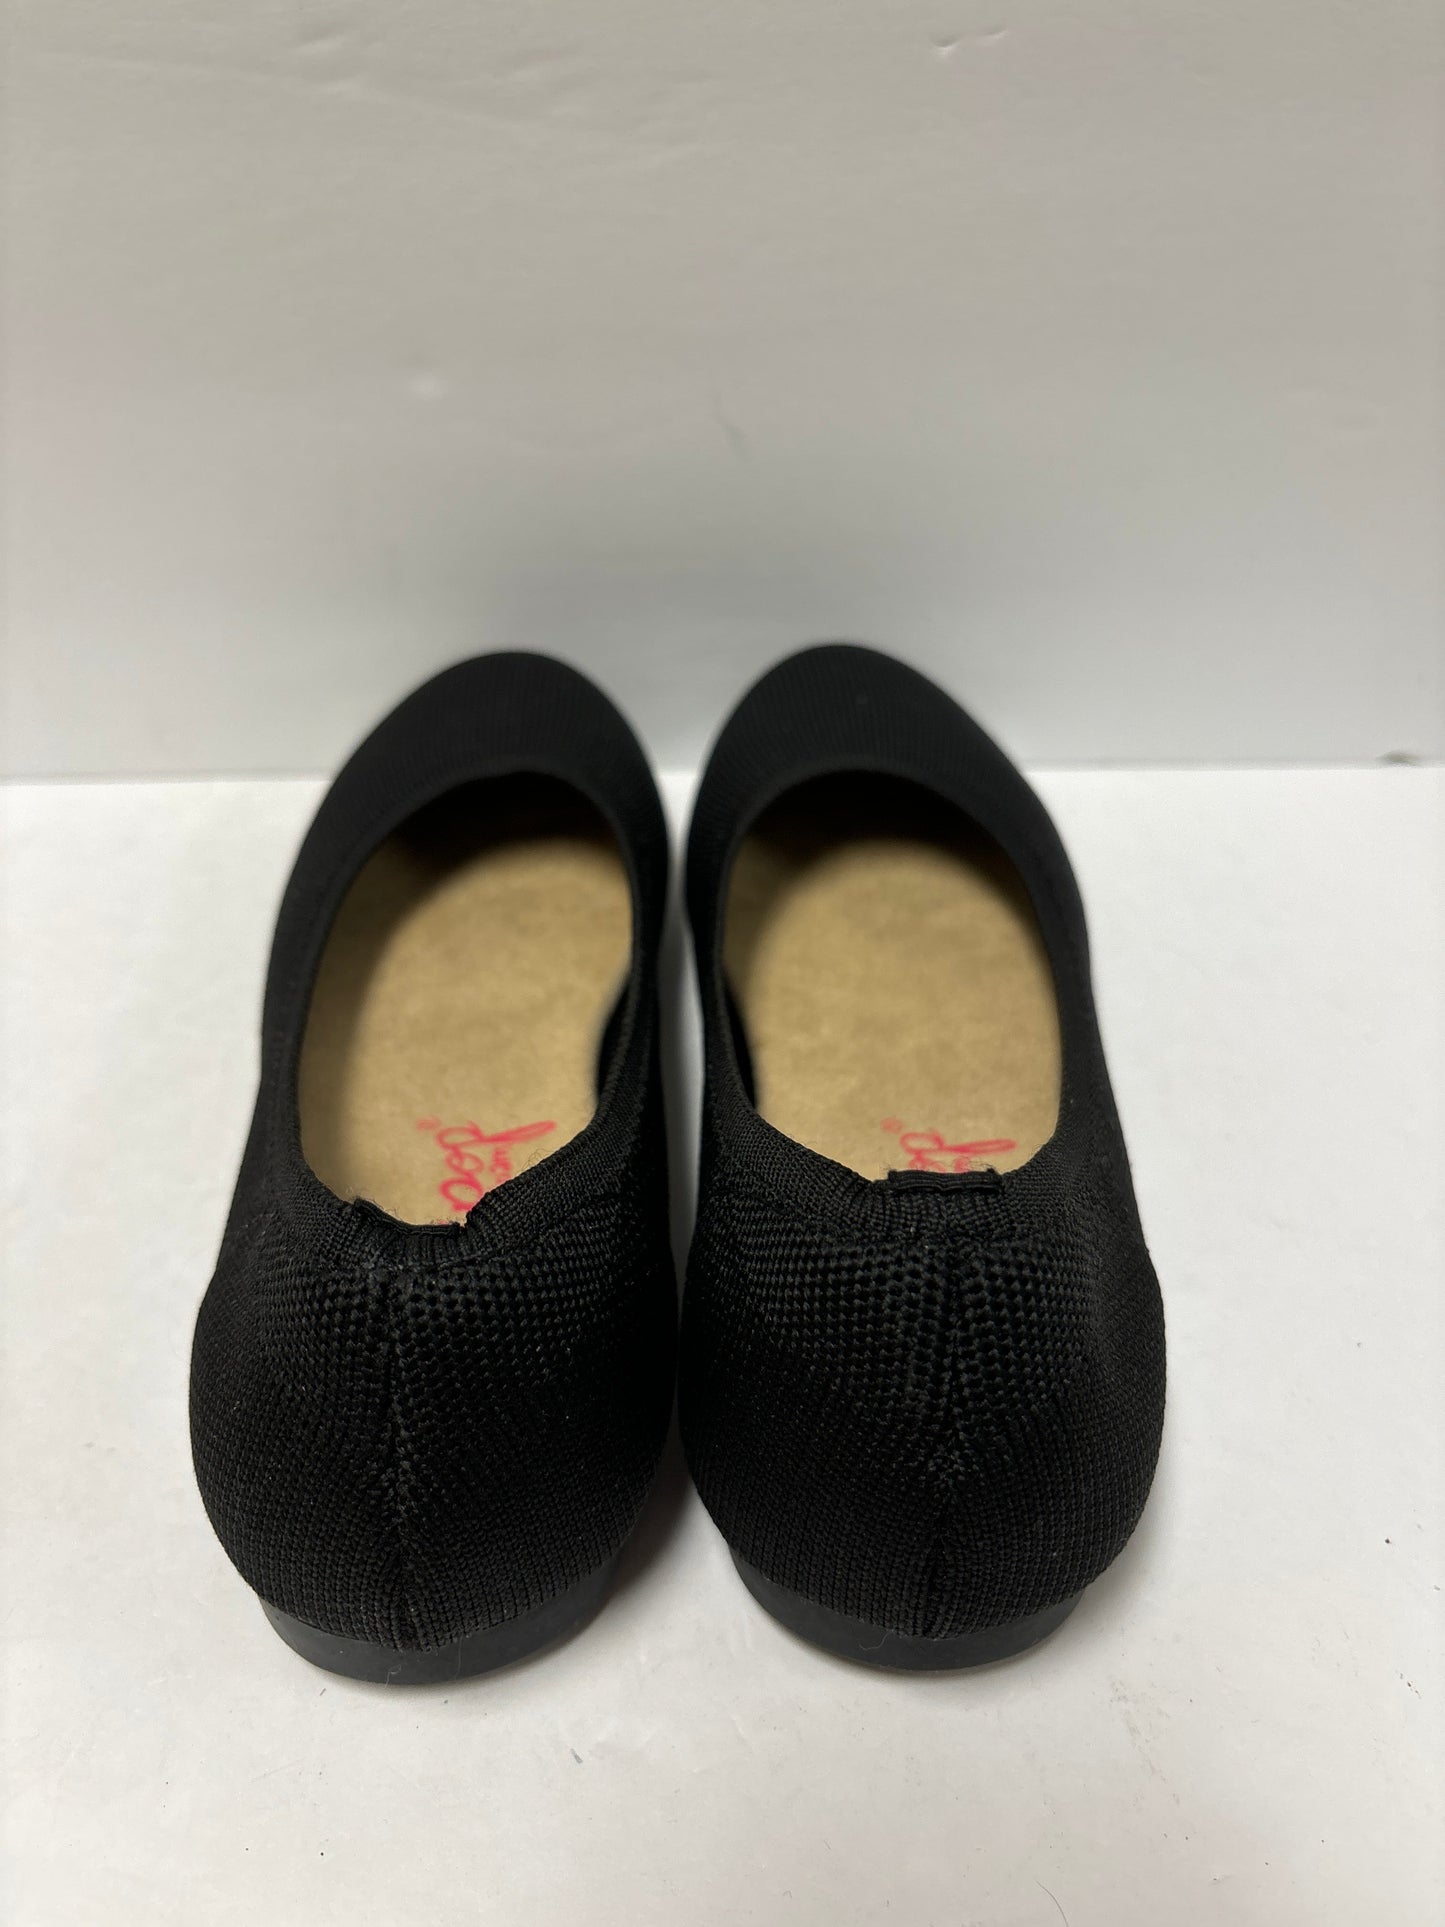 Black Shoes Flats Jelly Pop, Size 7